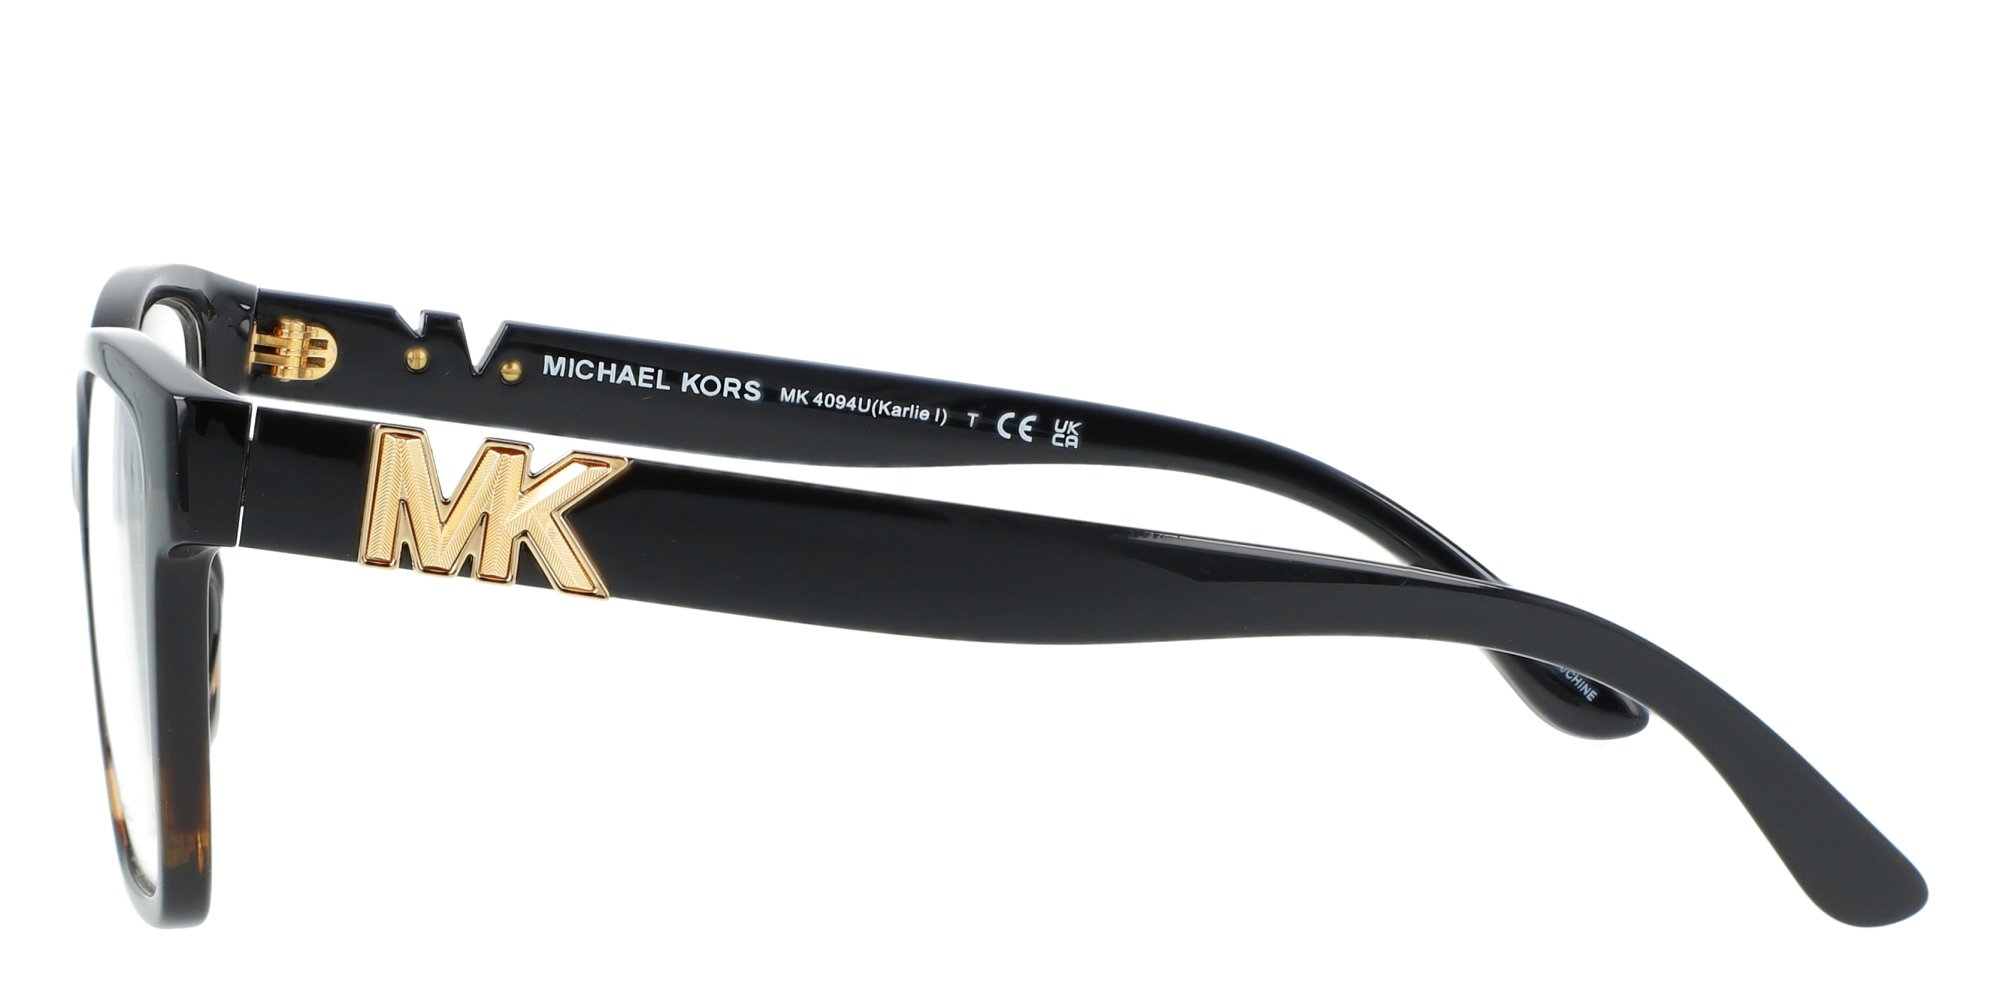 New Arrivals: Michael Kors Karlie Collection On Sale 25% Off